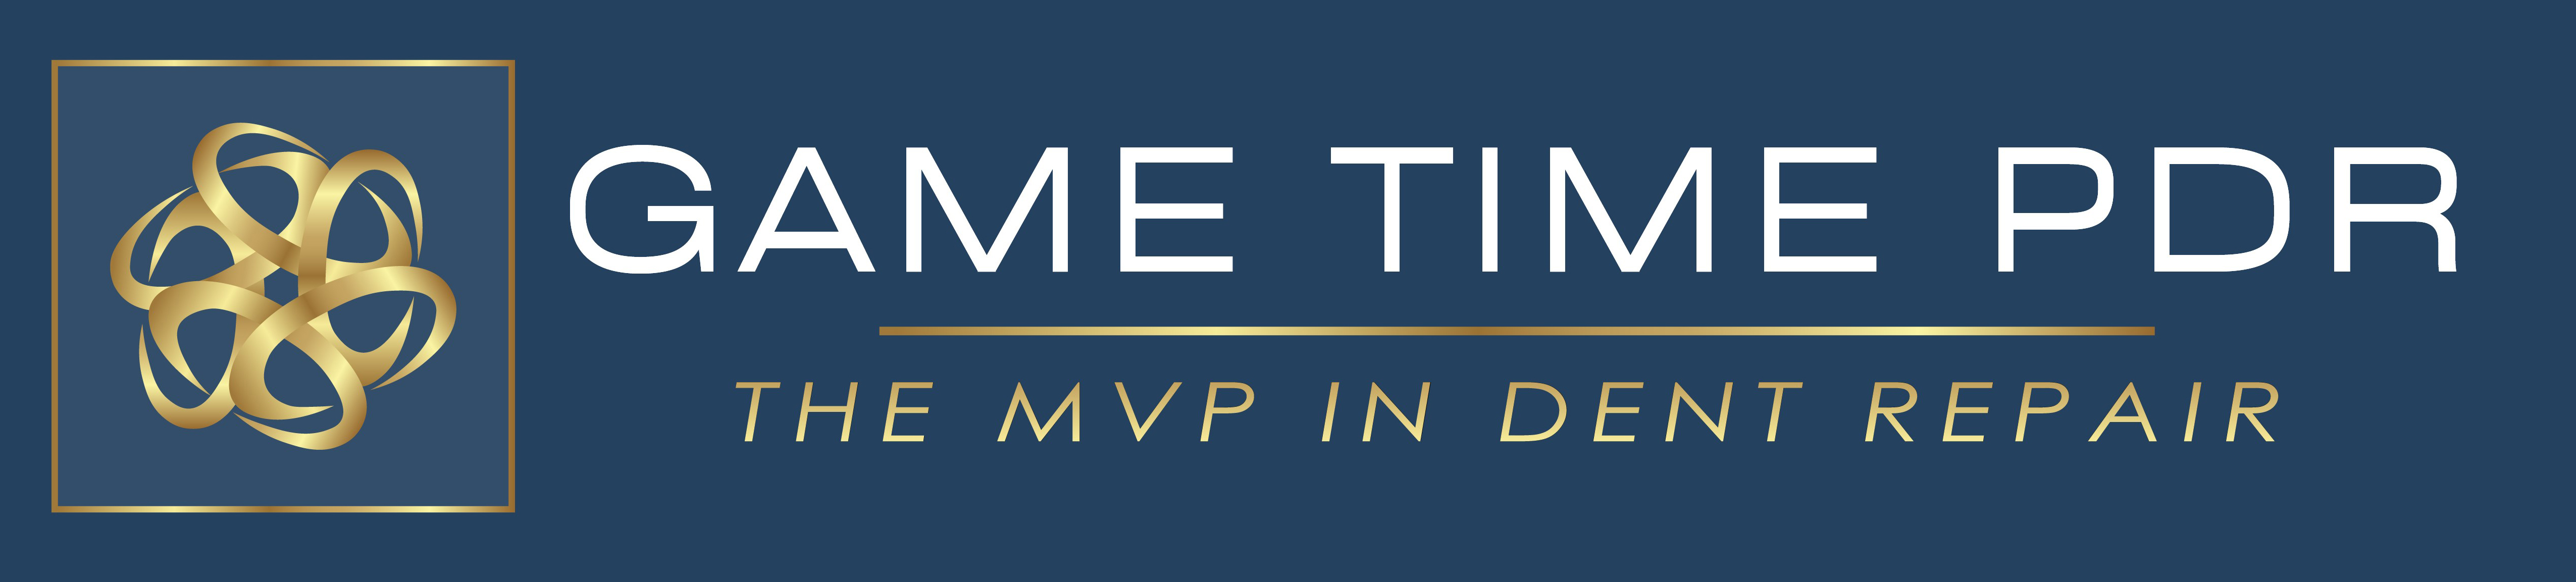 Game Time PDR  - Dent Repair - Logo